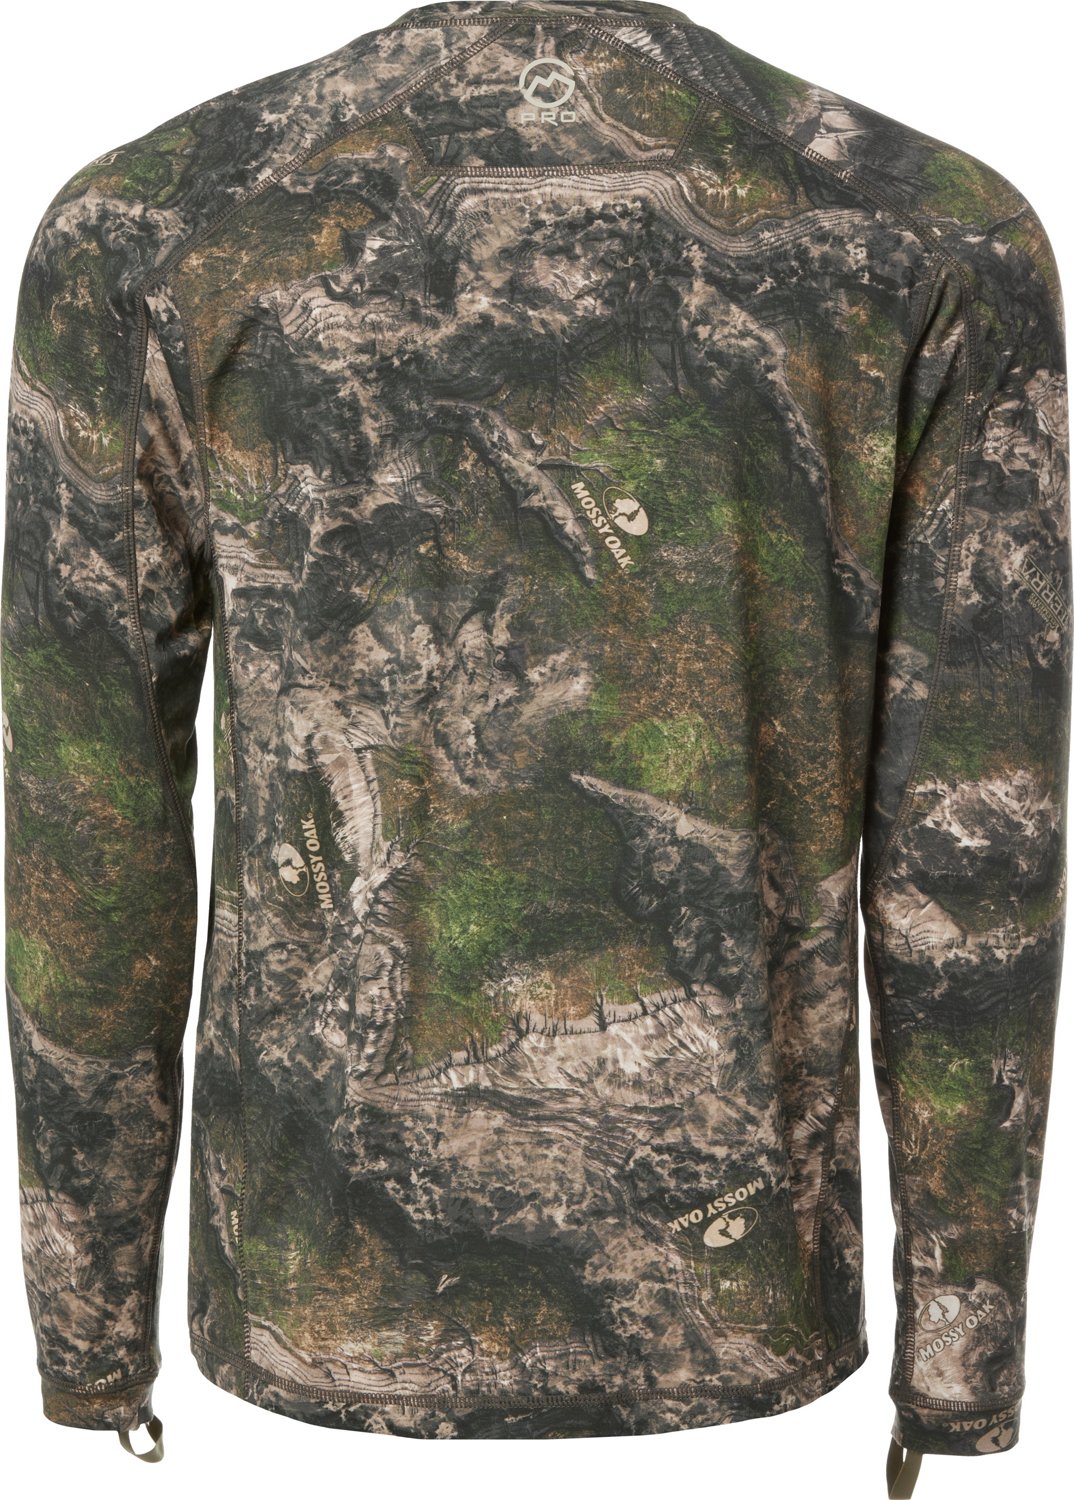 Magellan Outdoors Men's Terra Range Pro Hunt 1st Layer Shirt | Academy